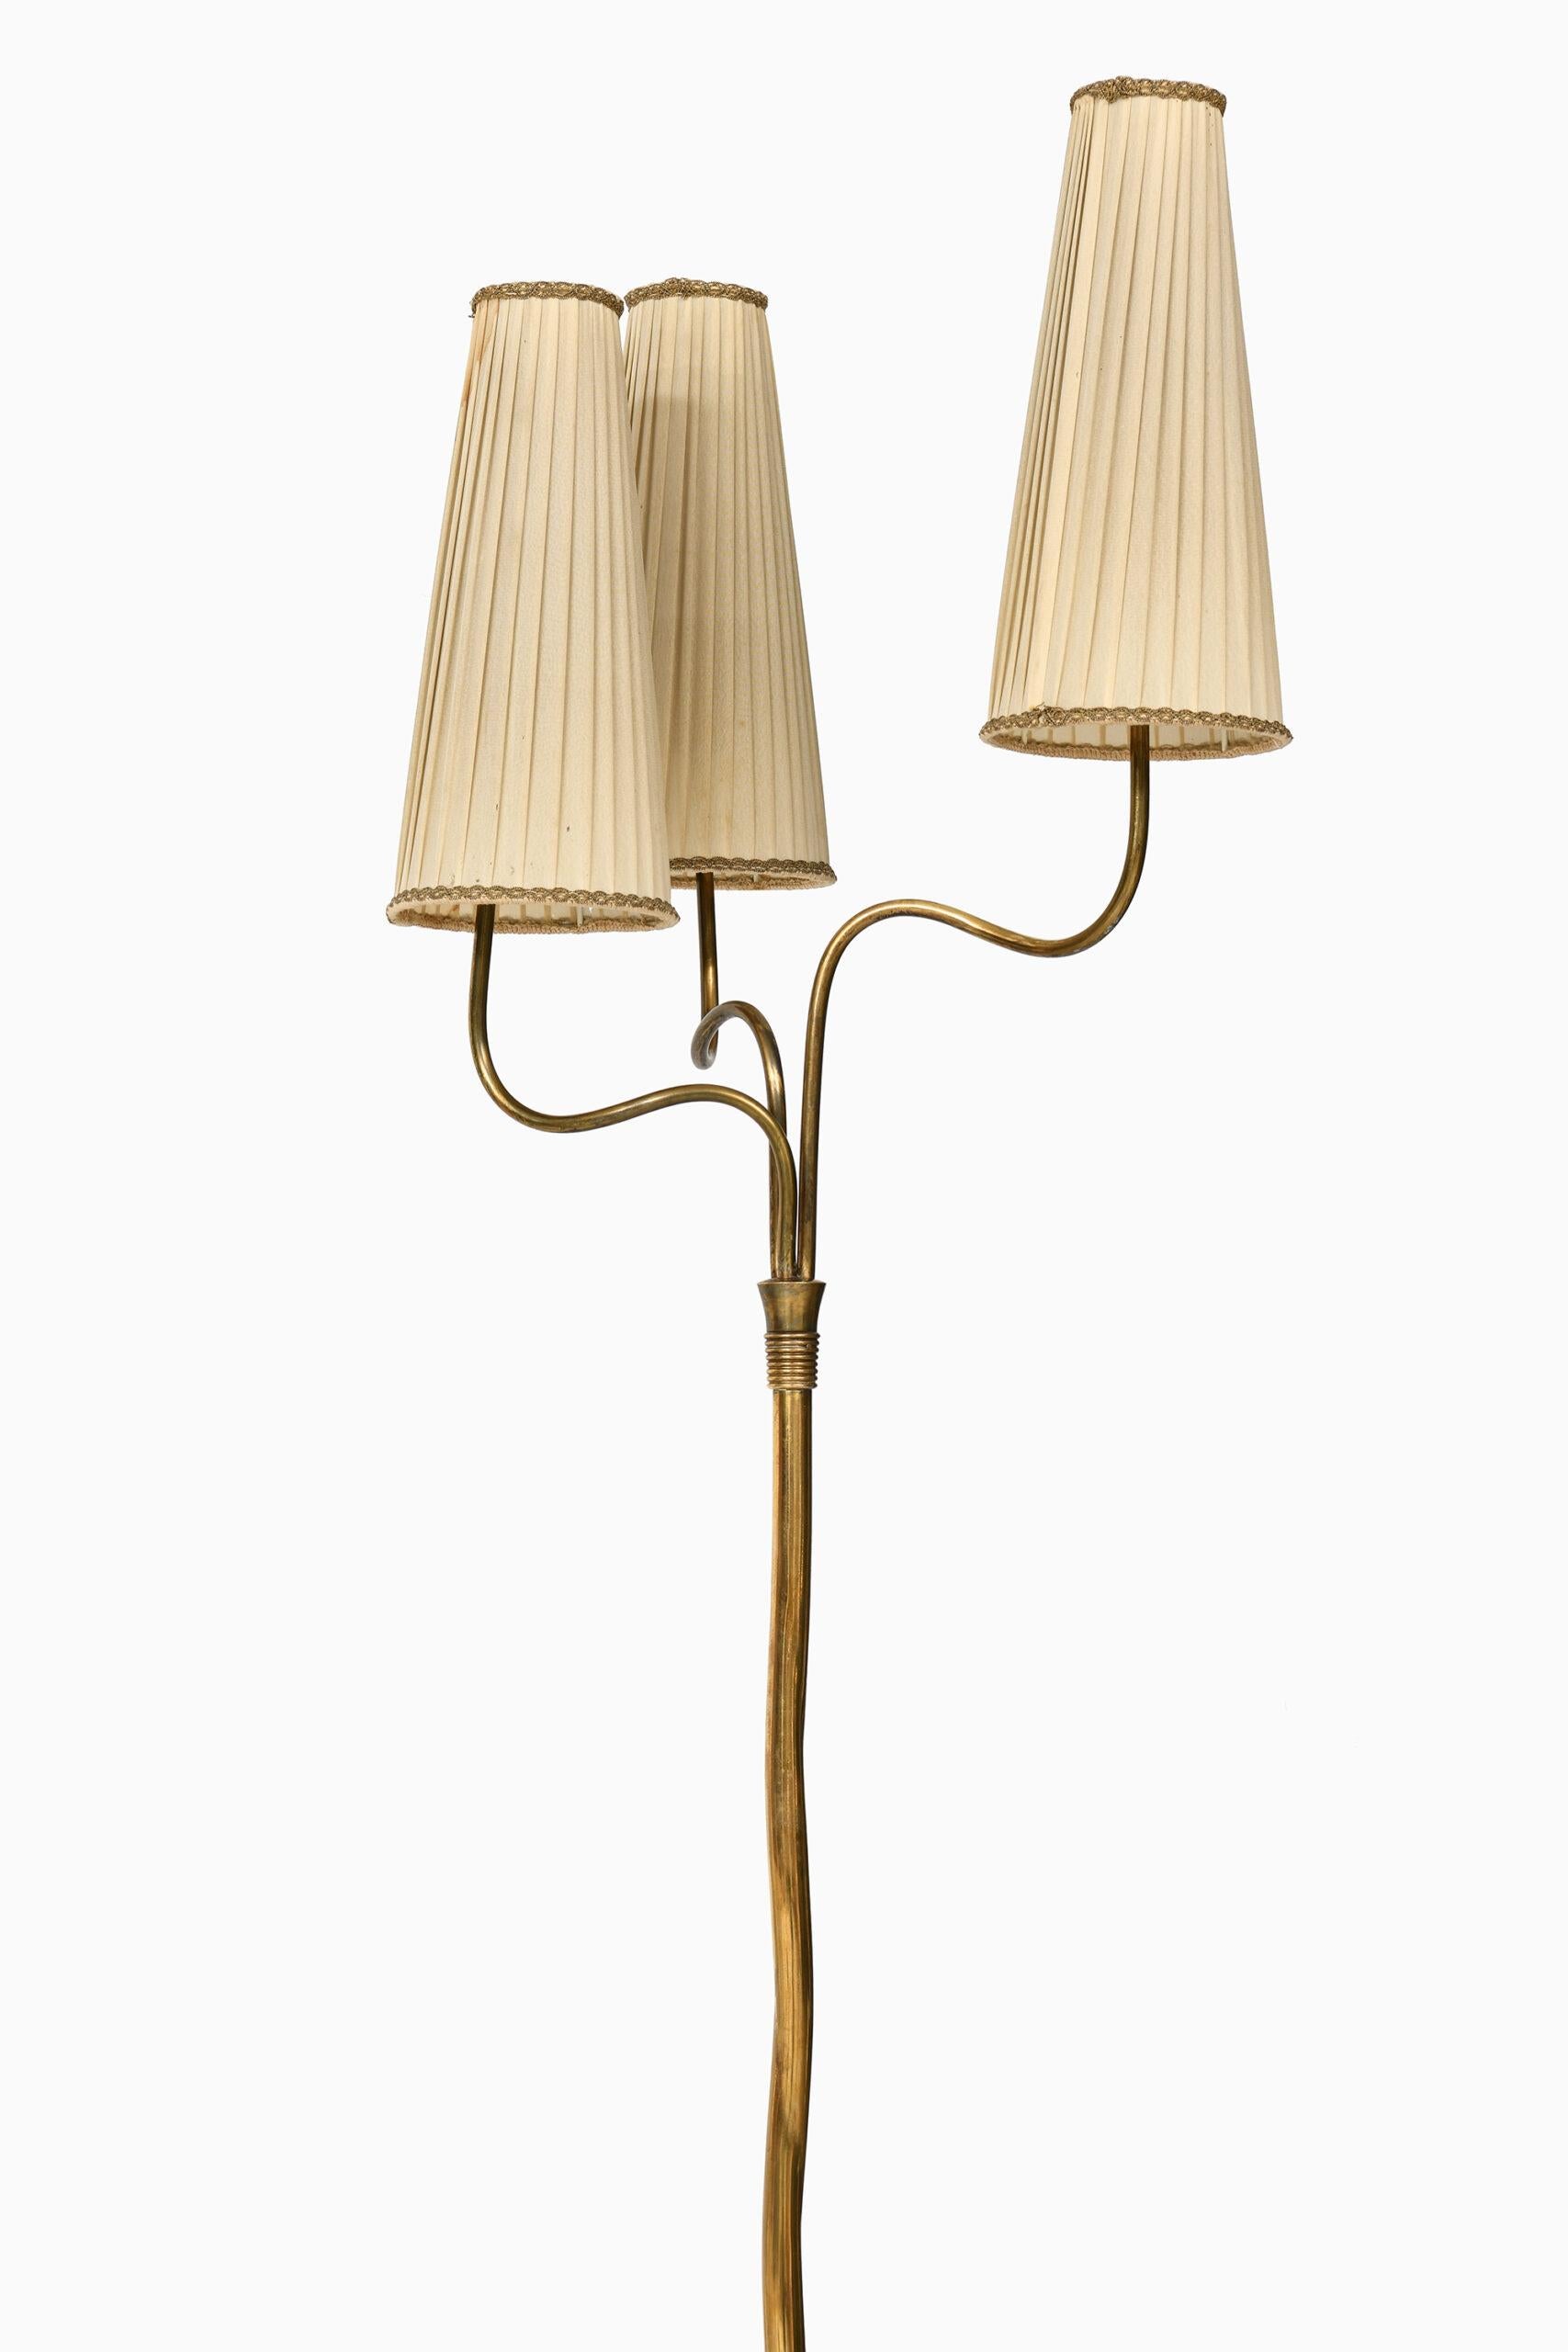 Rare lampadaire d'un designer inconnu. Produit par Itsu en Finlande.